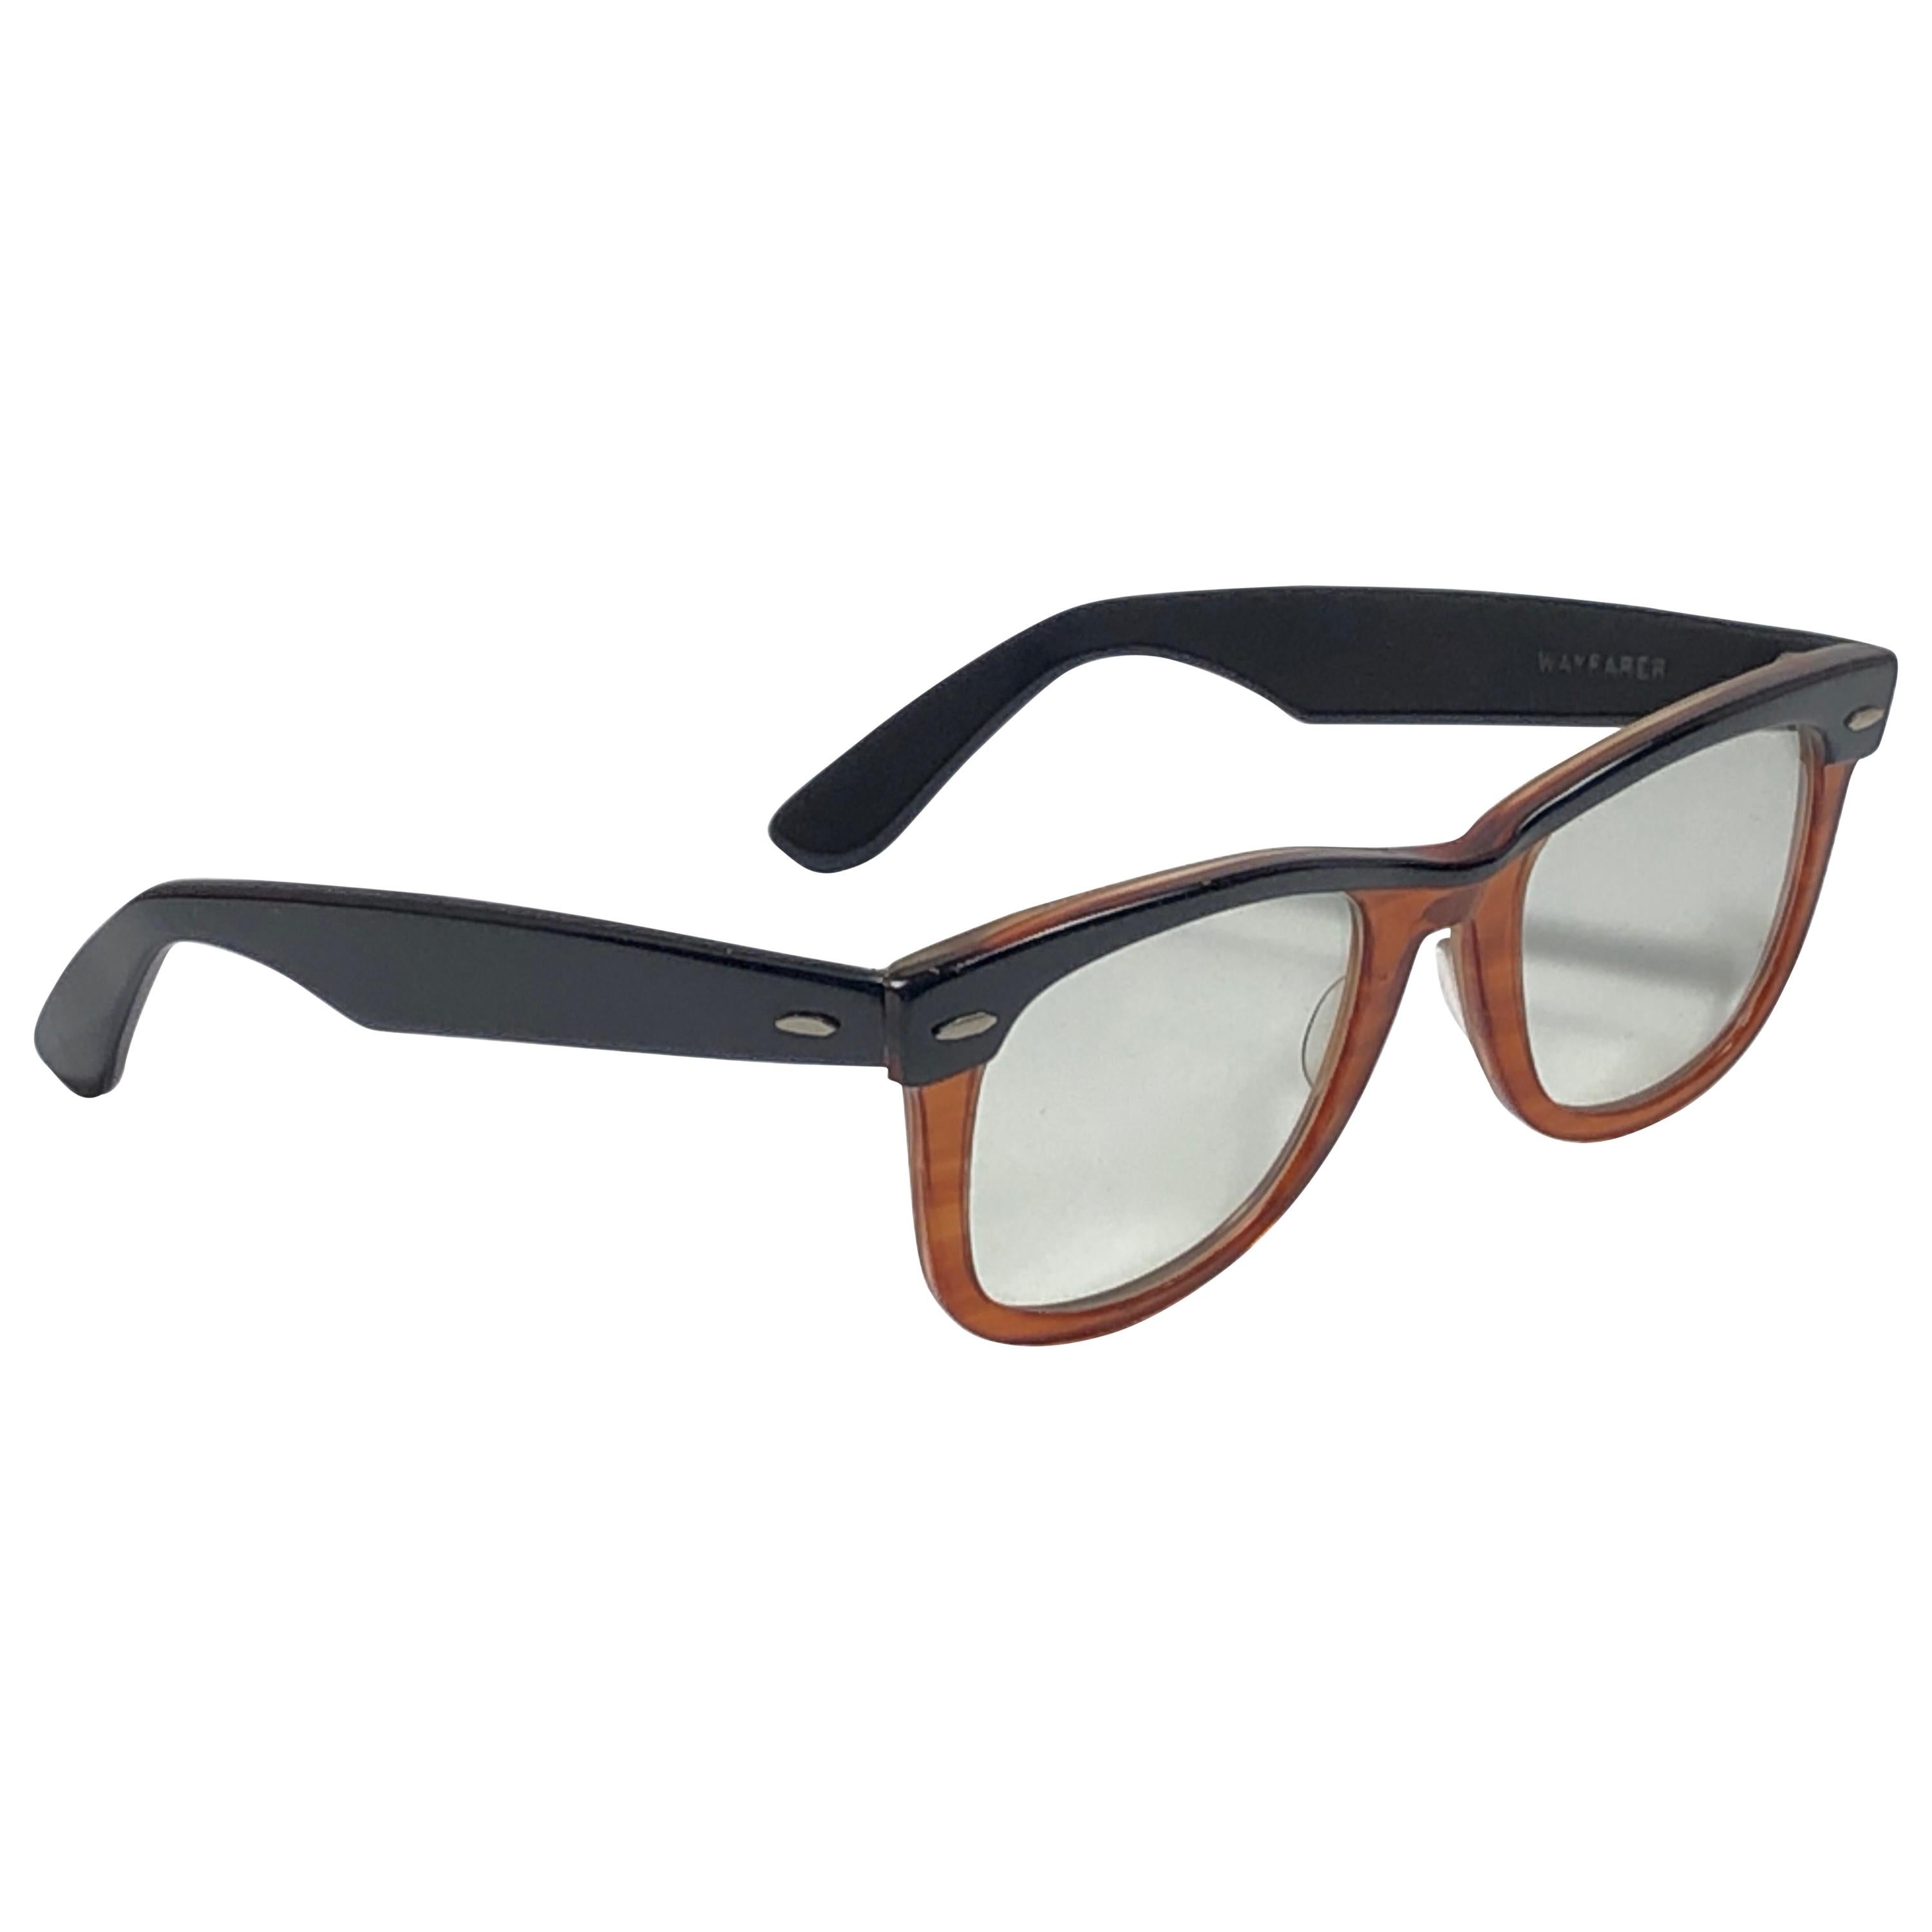 New Ray Ban Wayfarer 1980's Classic Black & Amber Light Lens B&L USA Sunglasses